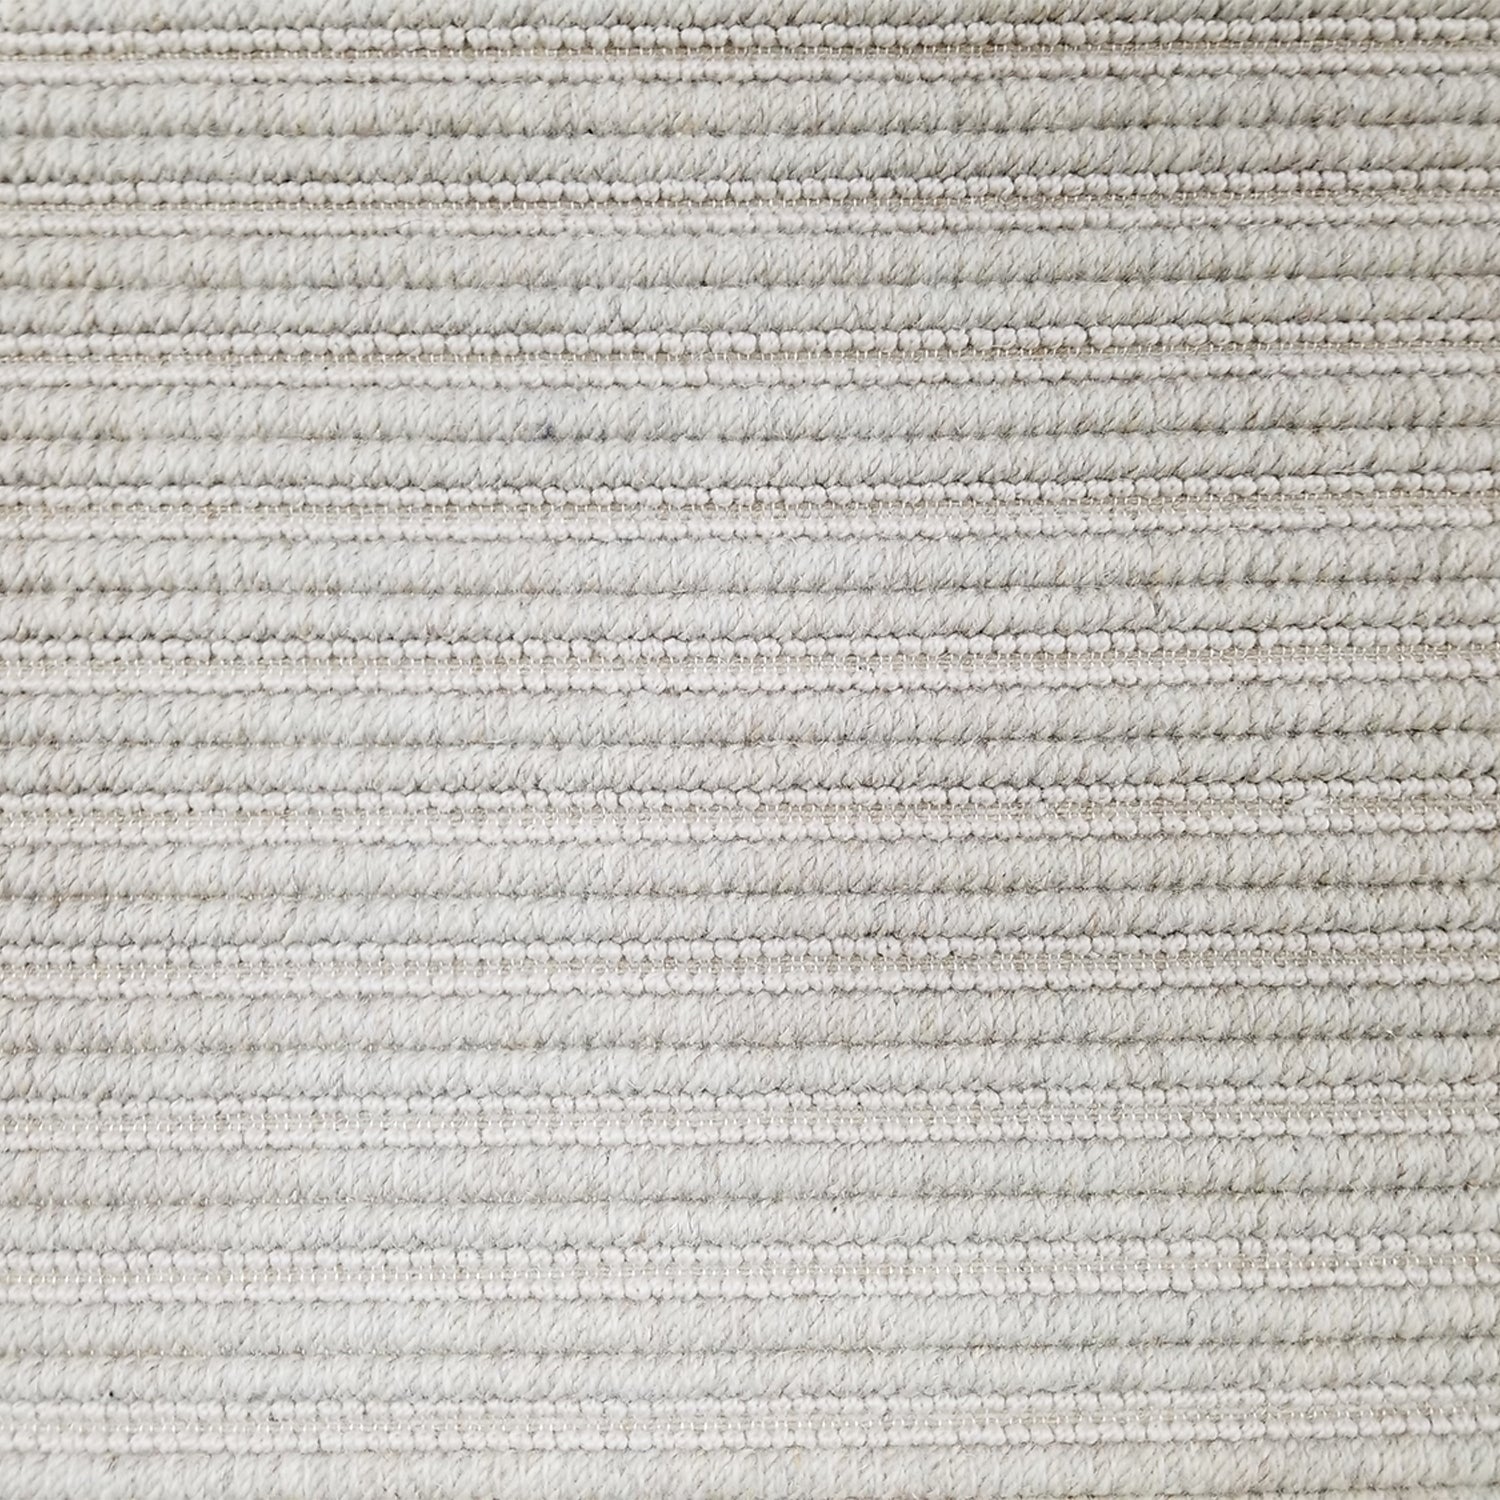 Wool broadloom carpet swatch in a textured stripe weave in a light silver colorway.